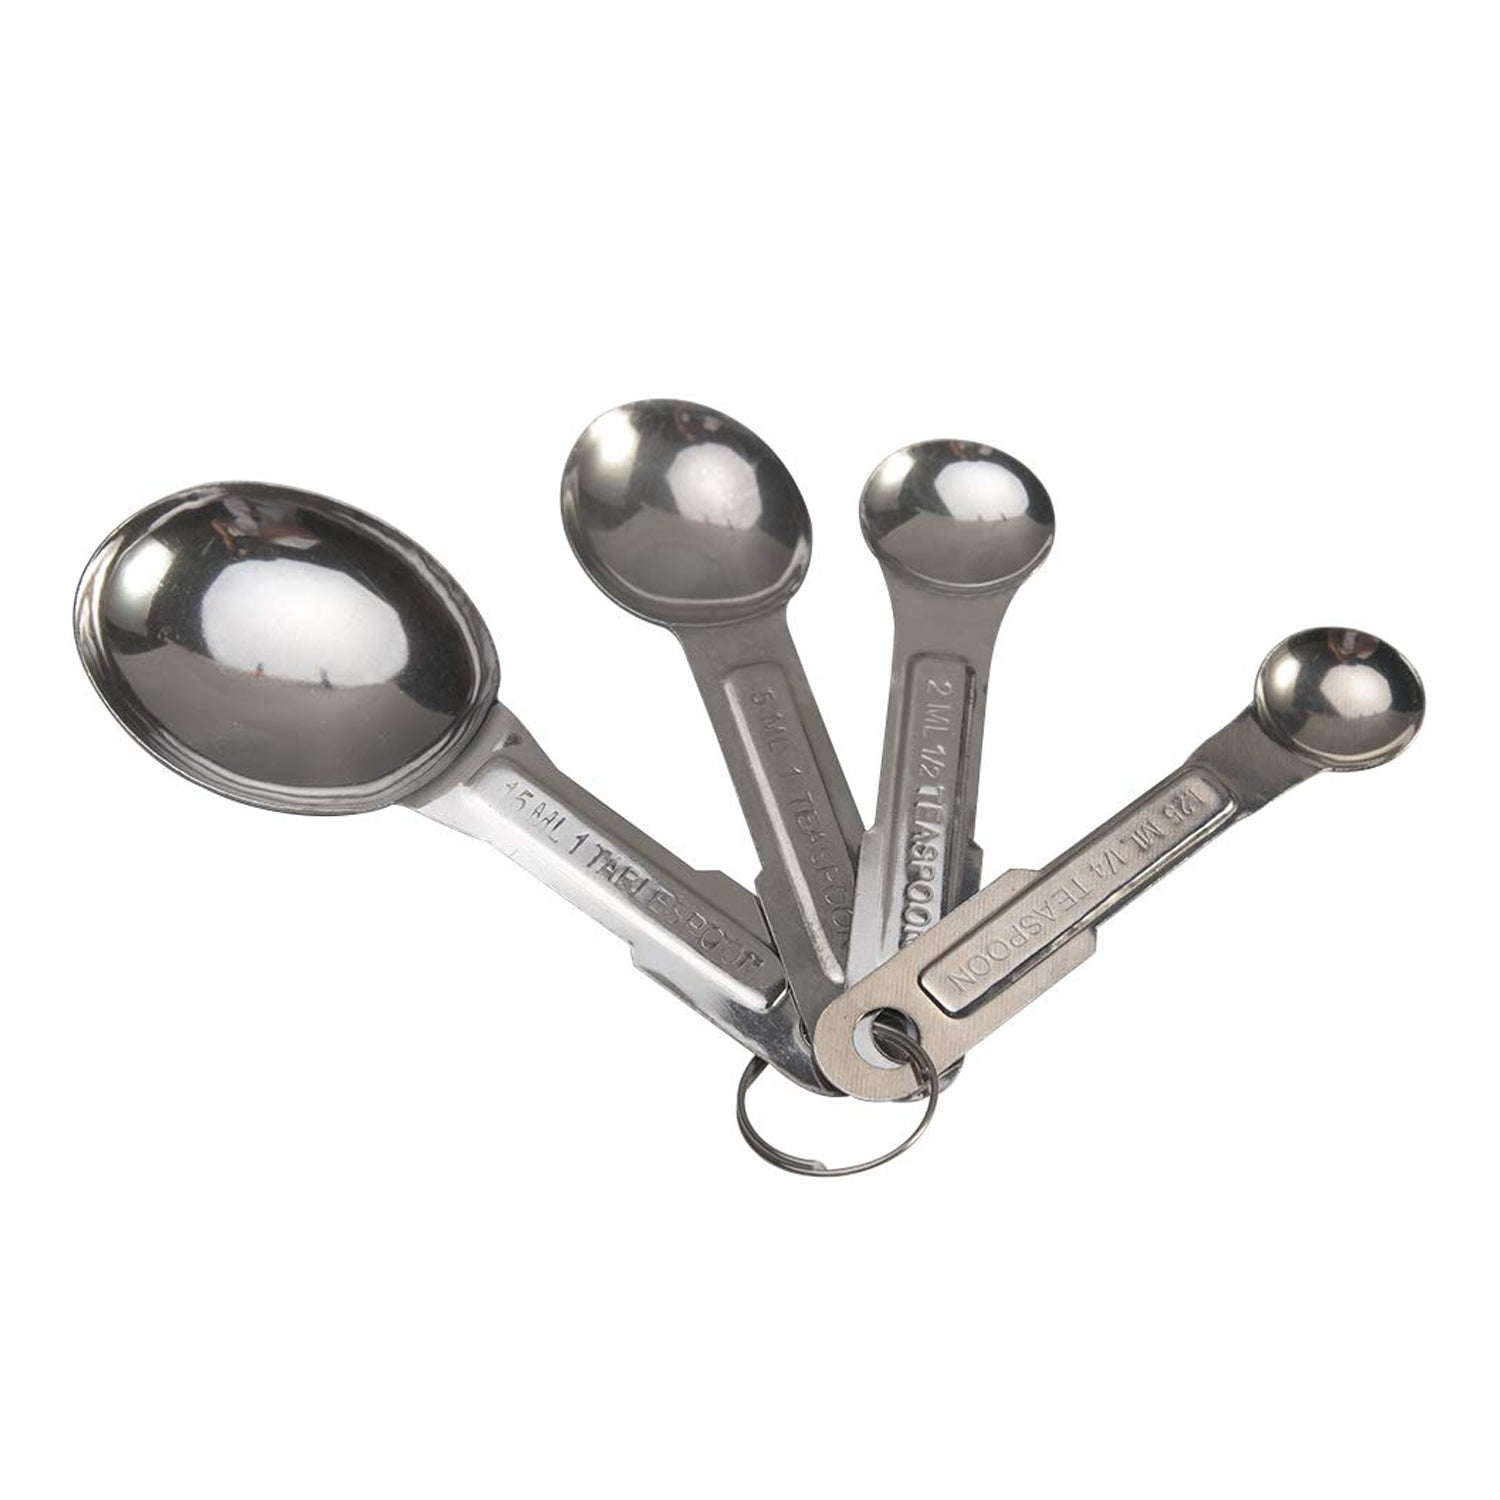 3685 Stainless Steel Measuring Spoons, 4pcs/set Durable Anti Rust Measuring Spoon Set Universal for Kitchen Baking. 